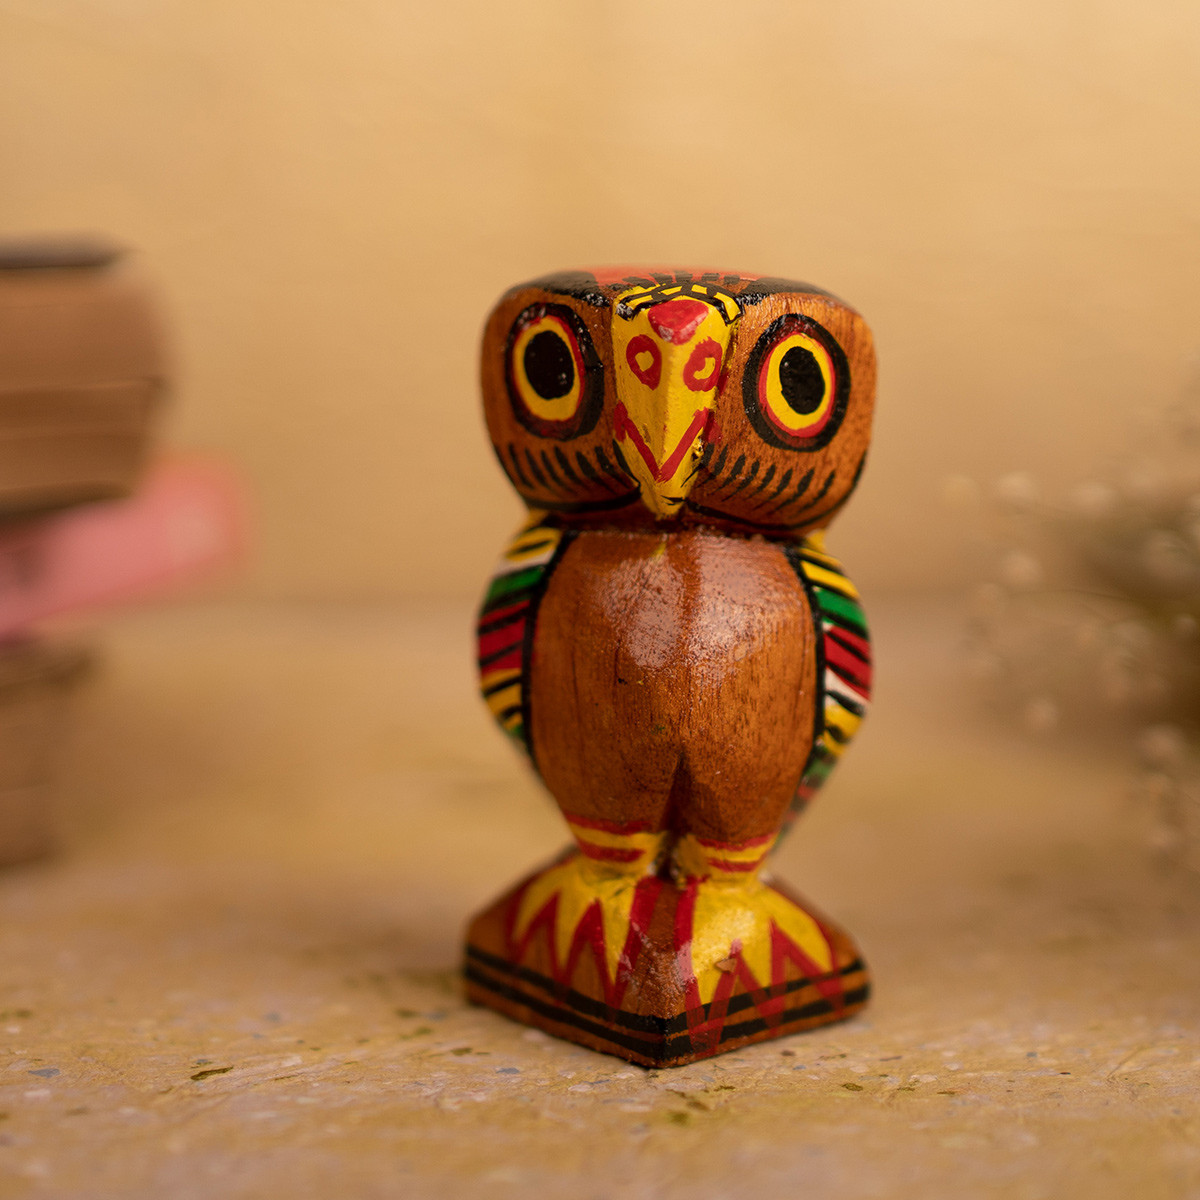 Notungram's Wooden Owl